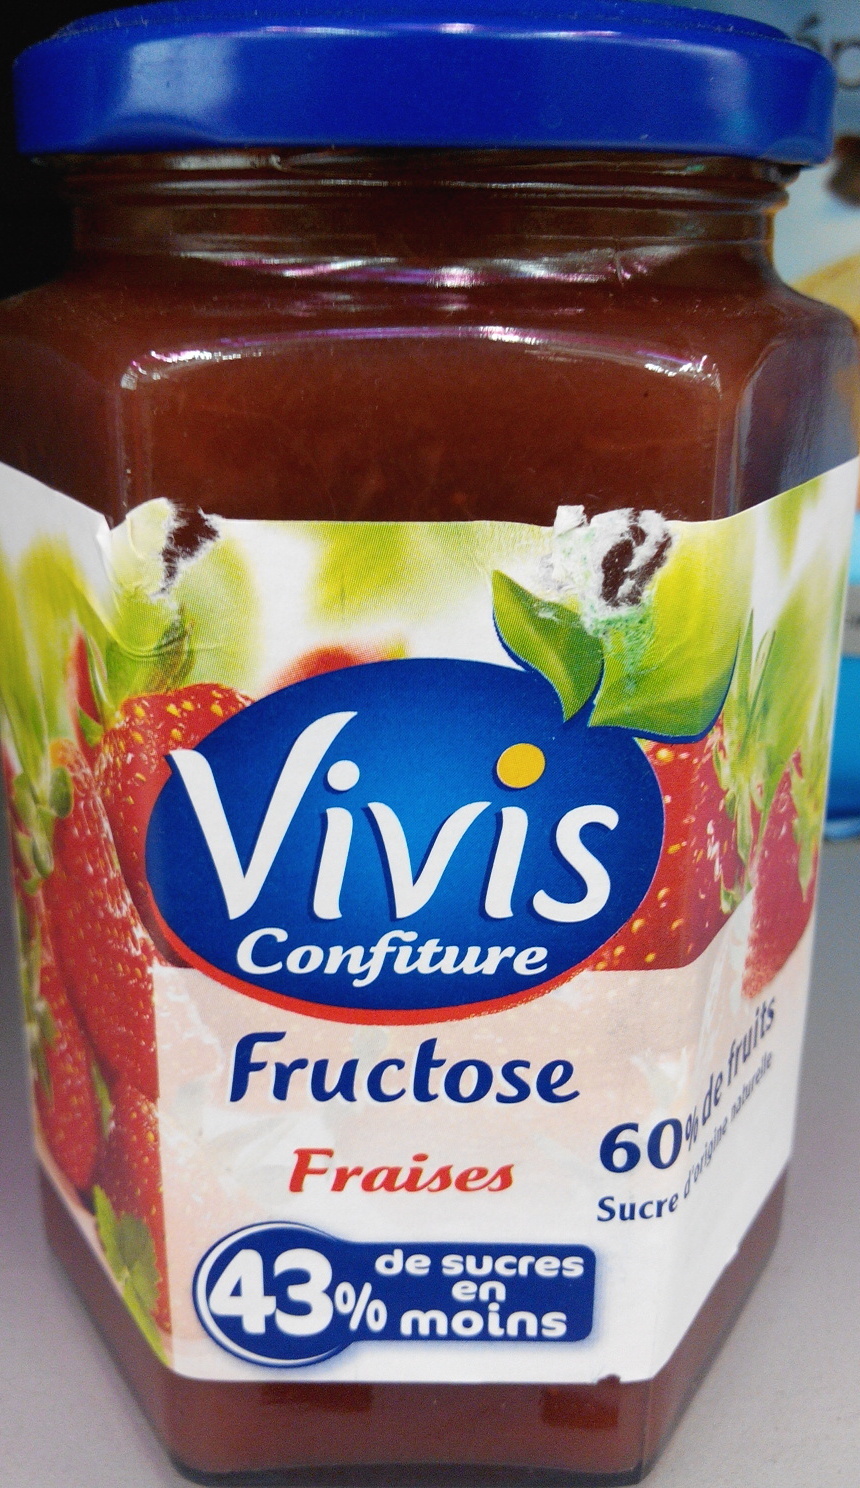 Confiture fructose fraise - Product - fr